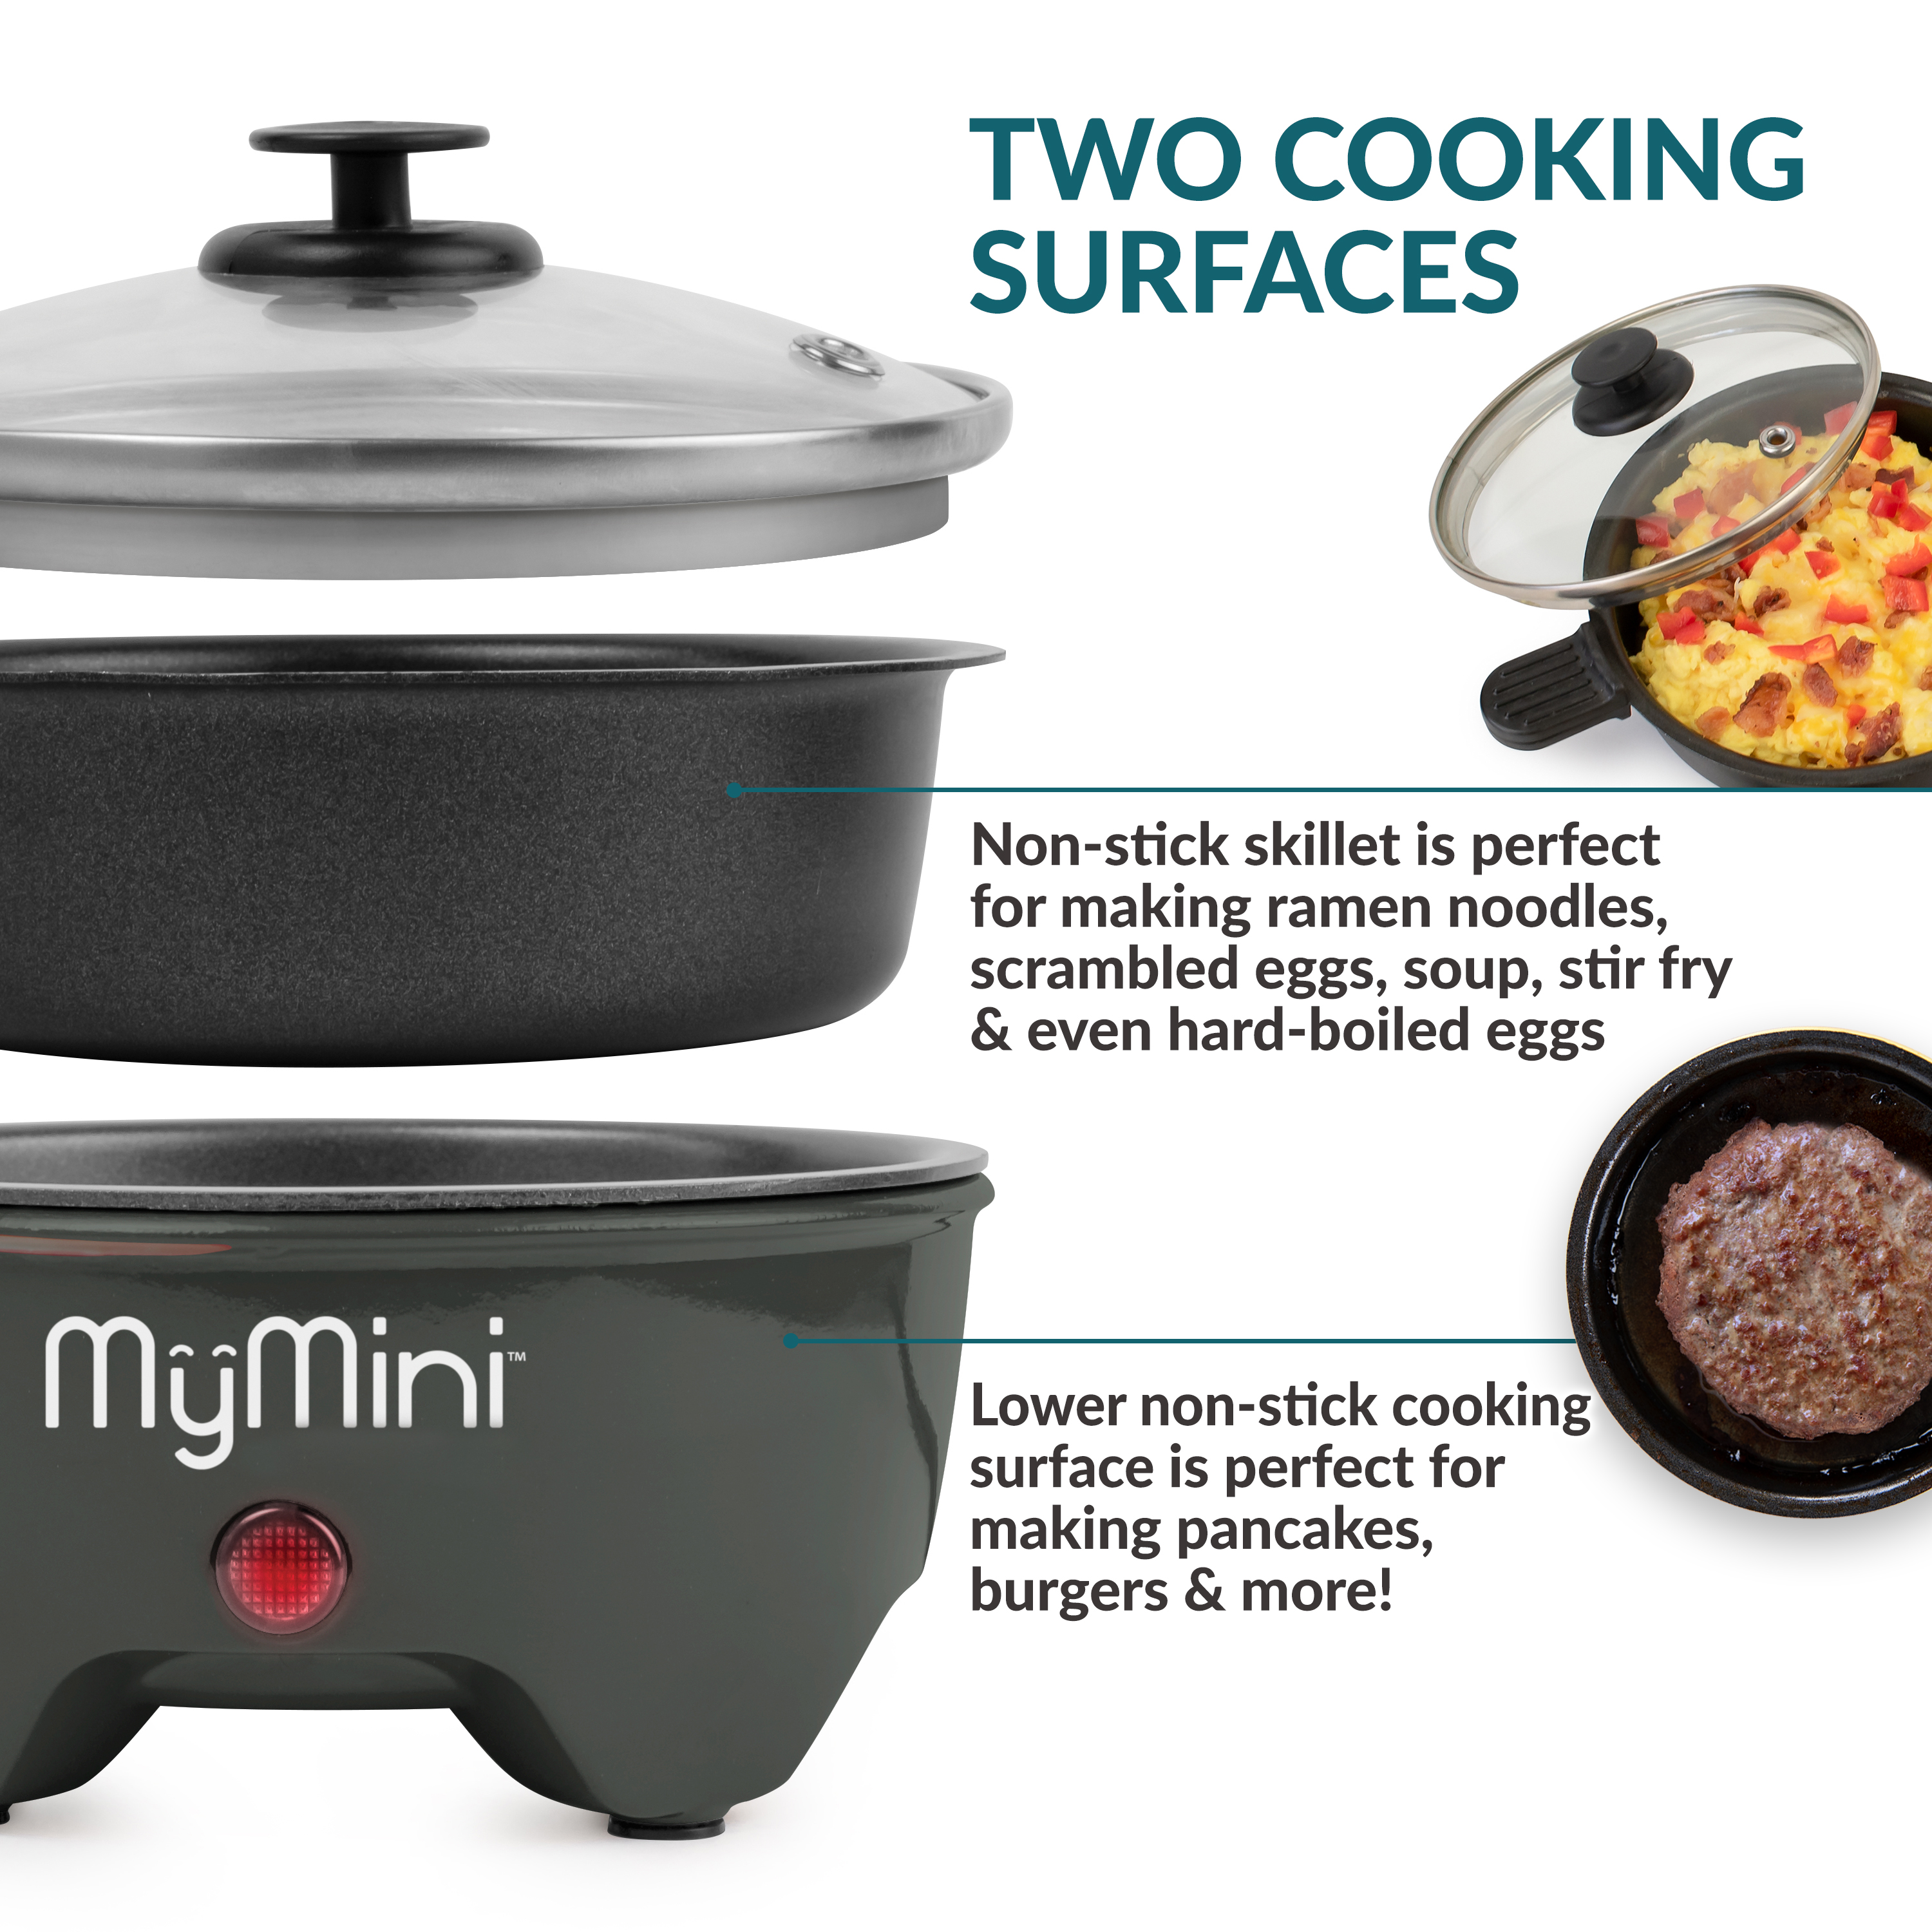 MyMini 5-inch Noodle Cooker & Skillet Electric Hot Pot, Blackberry (3.7" x 5.25", 1.25 Lb) - image 5 of 13